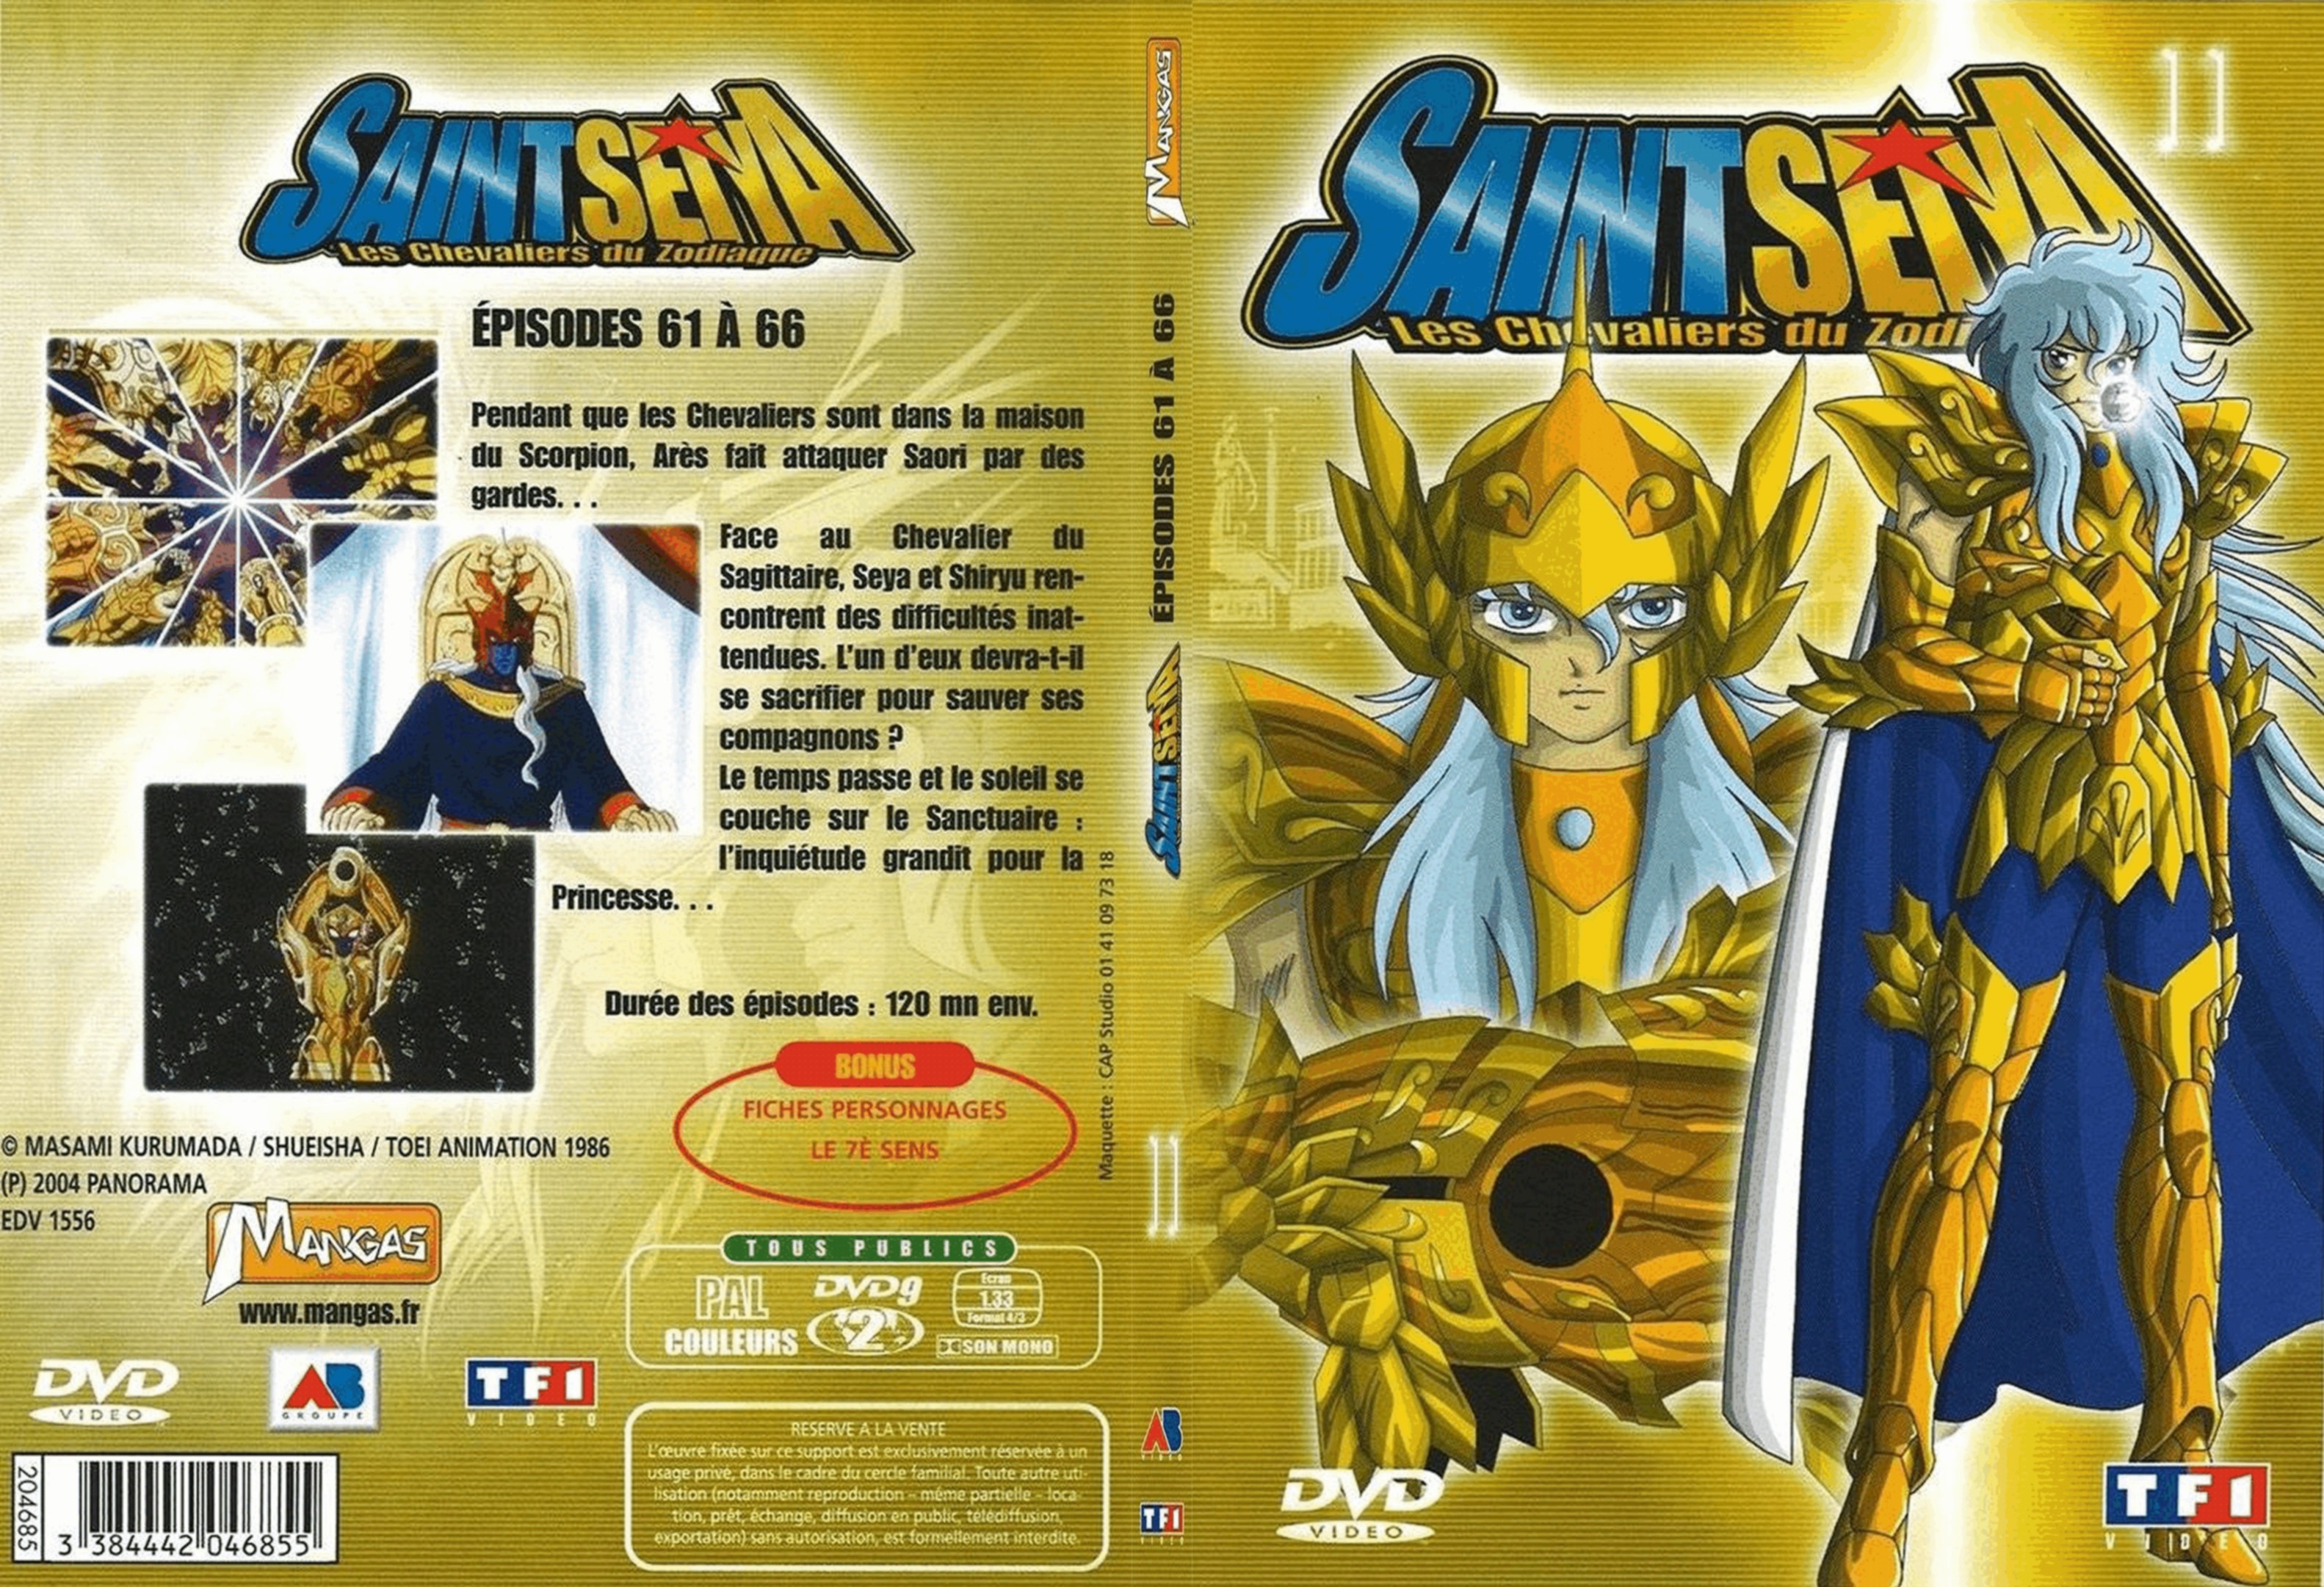 Jaquette DVD Saint Seiya vol 11 - SLIM